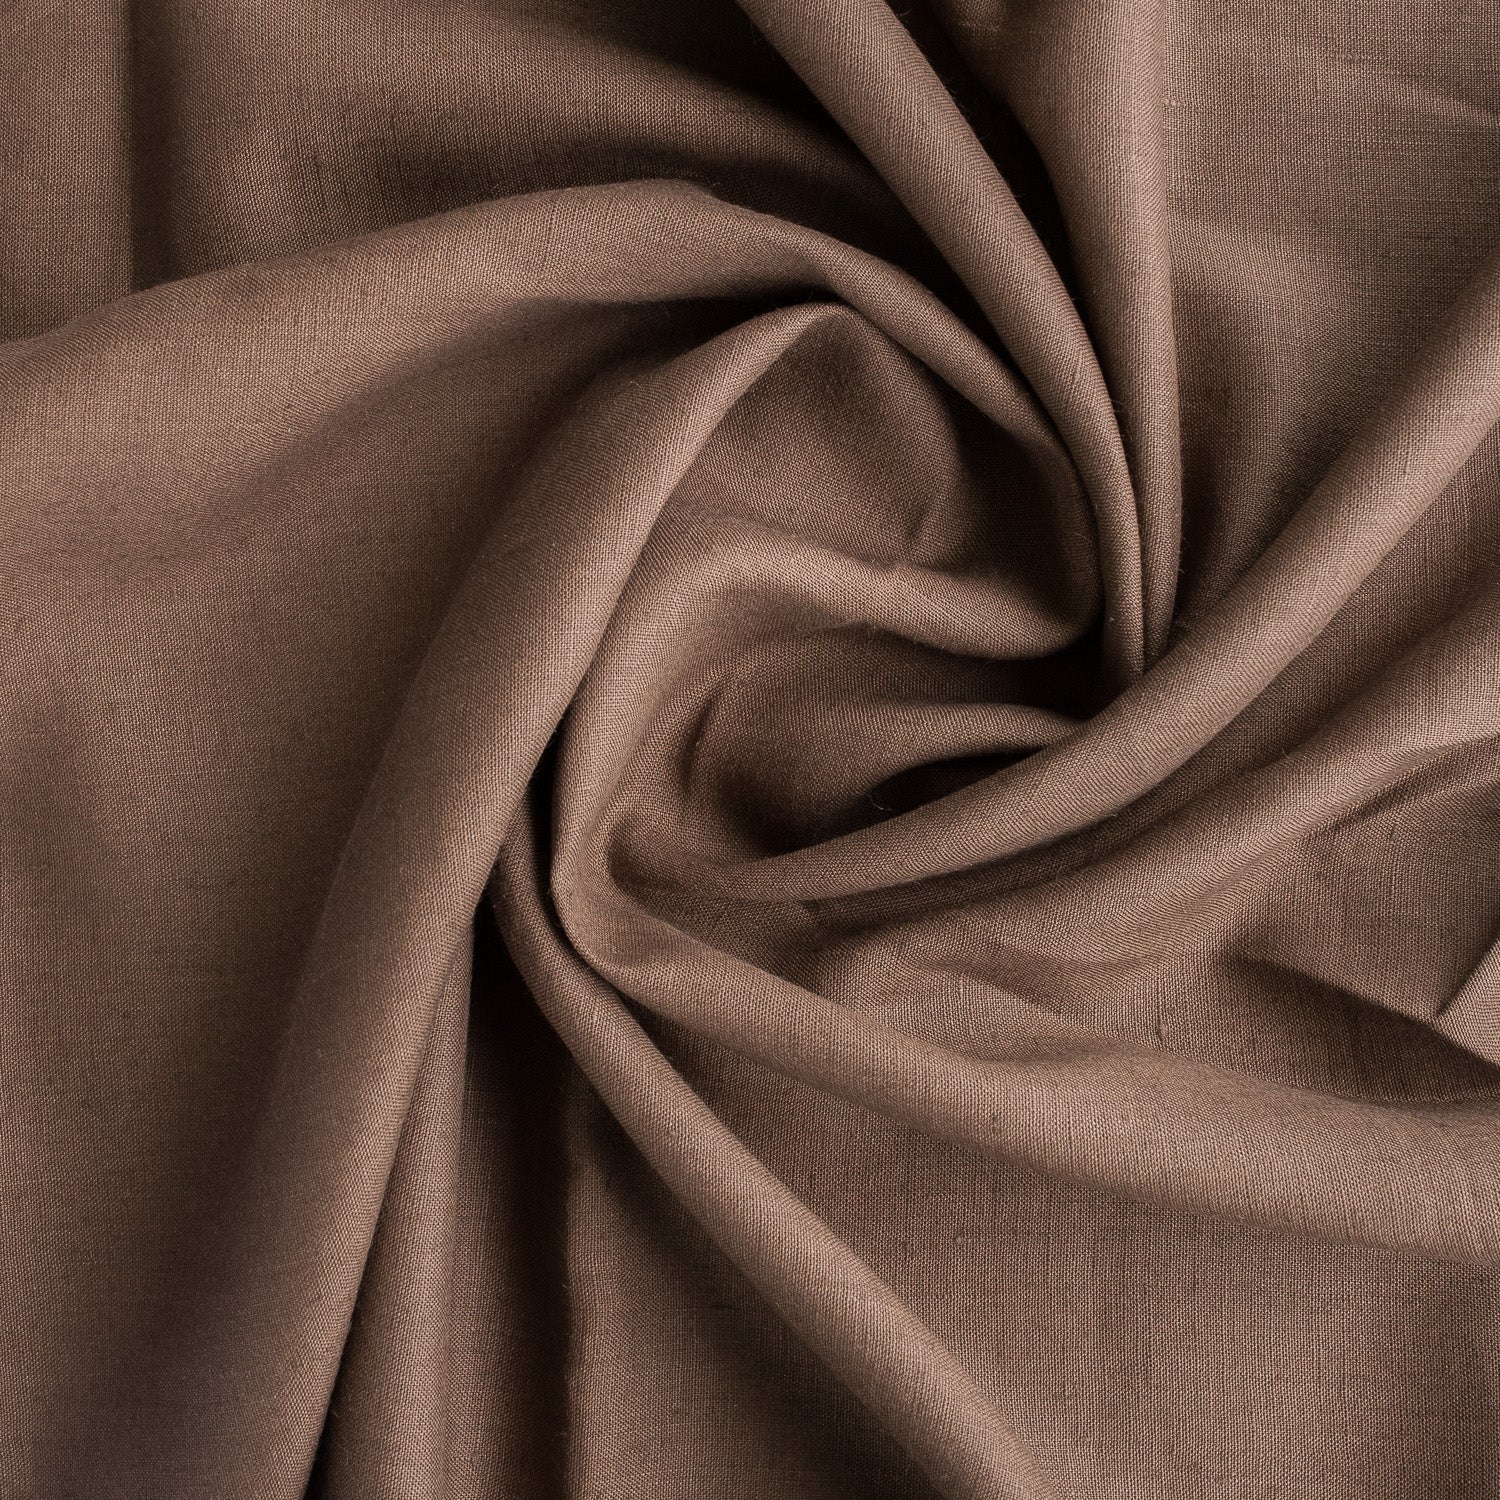 Coffee Bean Brown 100% Linen Fabric